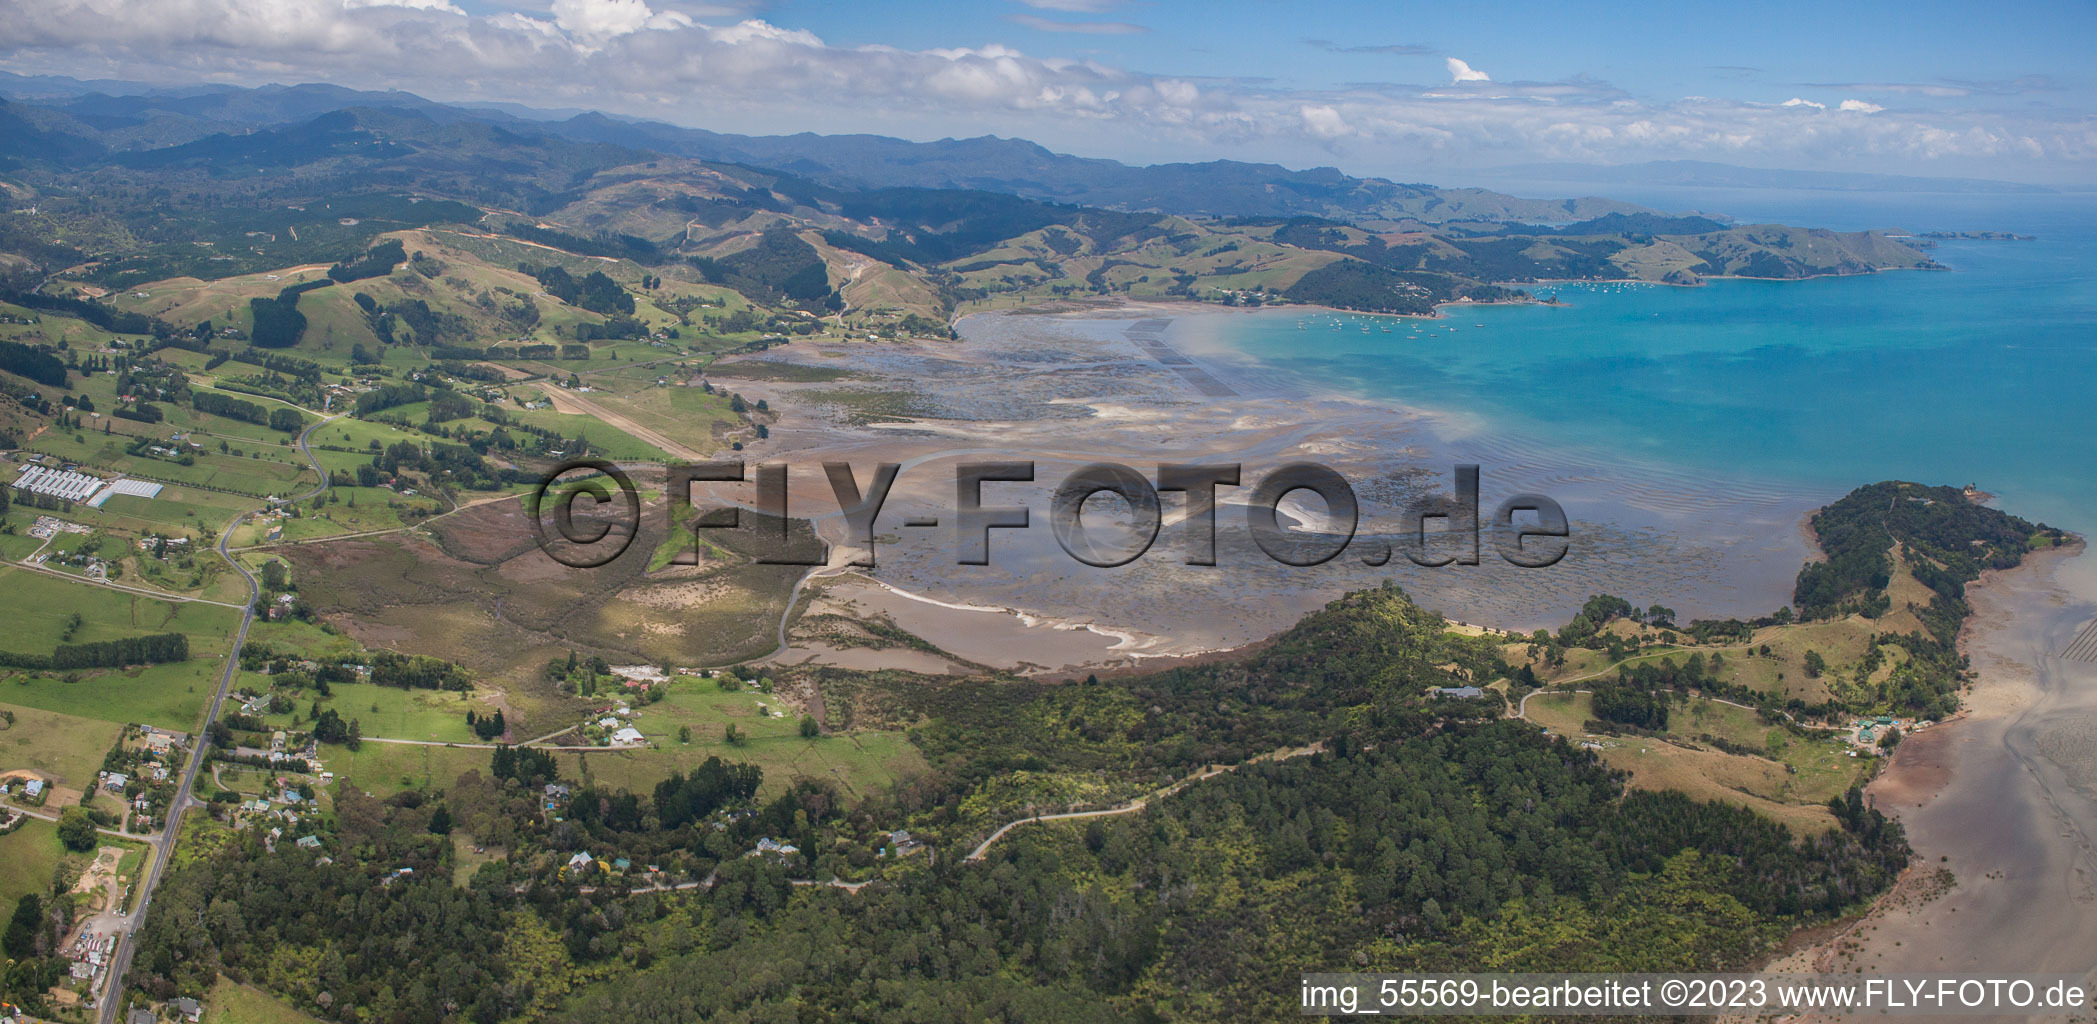 Luftbild von Coromandel im Bundesland Waikato, Neuseeland